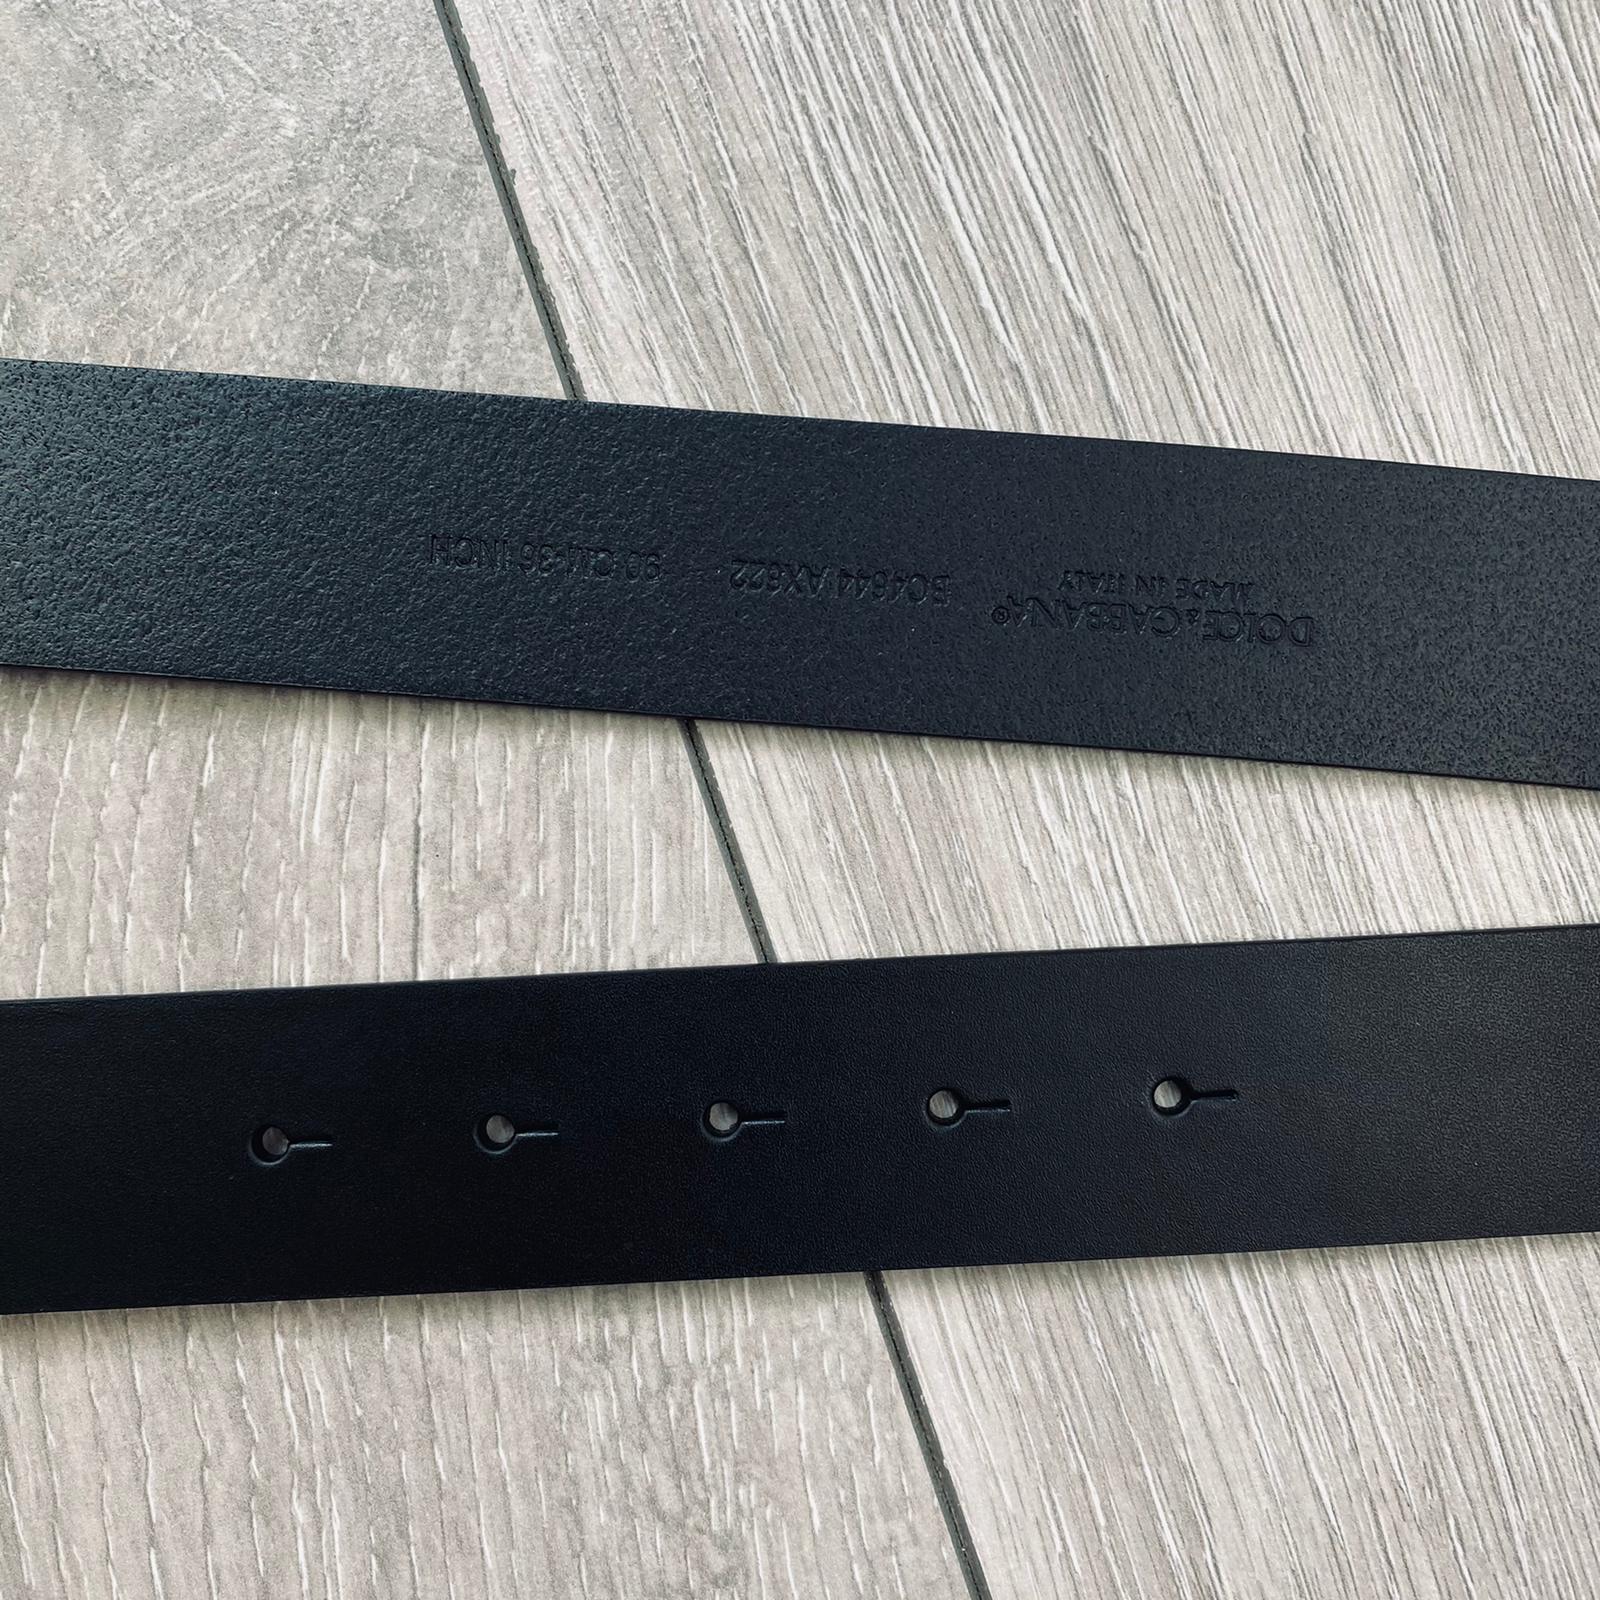 D&G Chrome Leather Belt